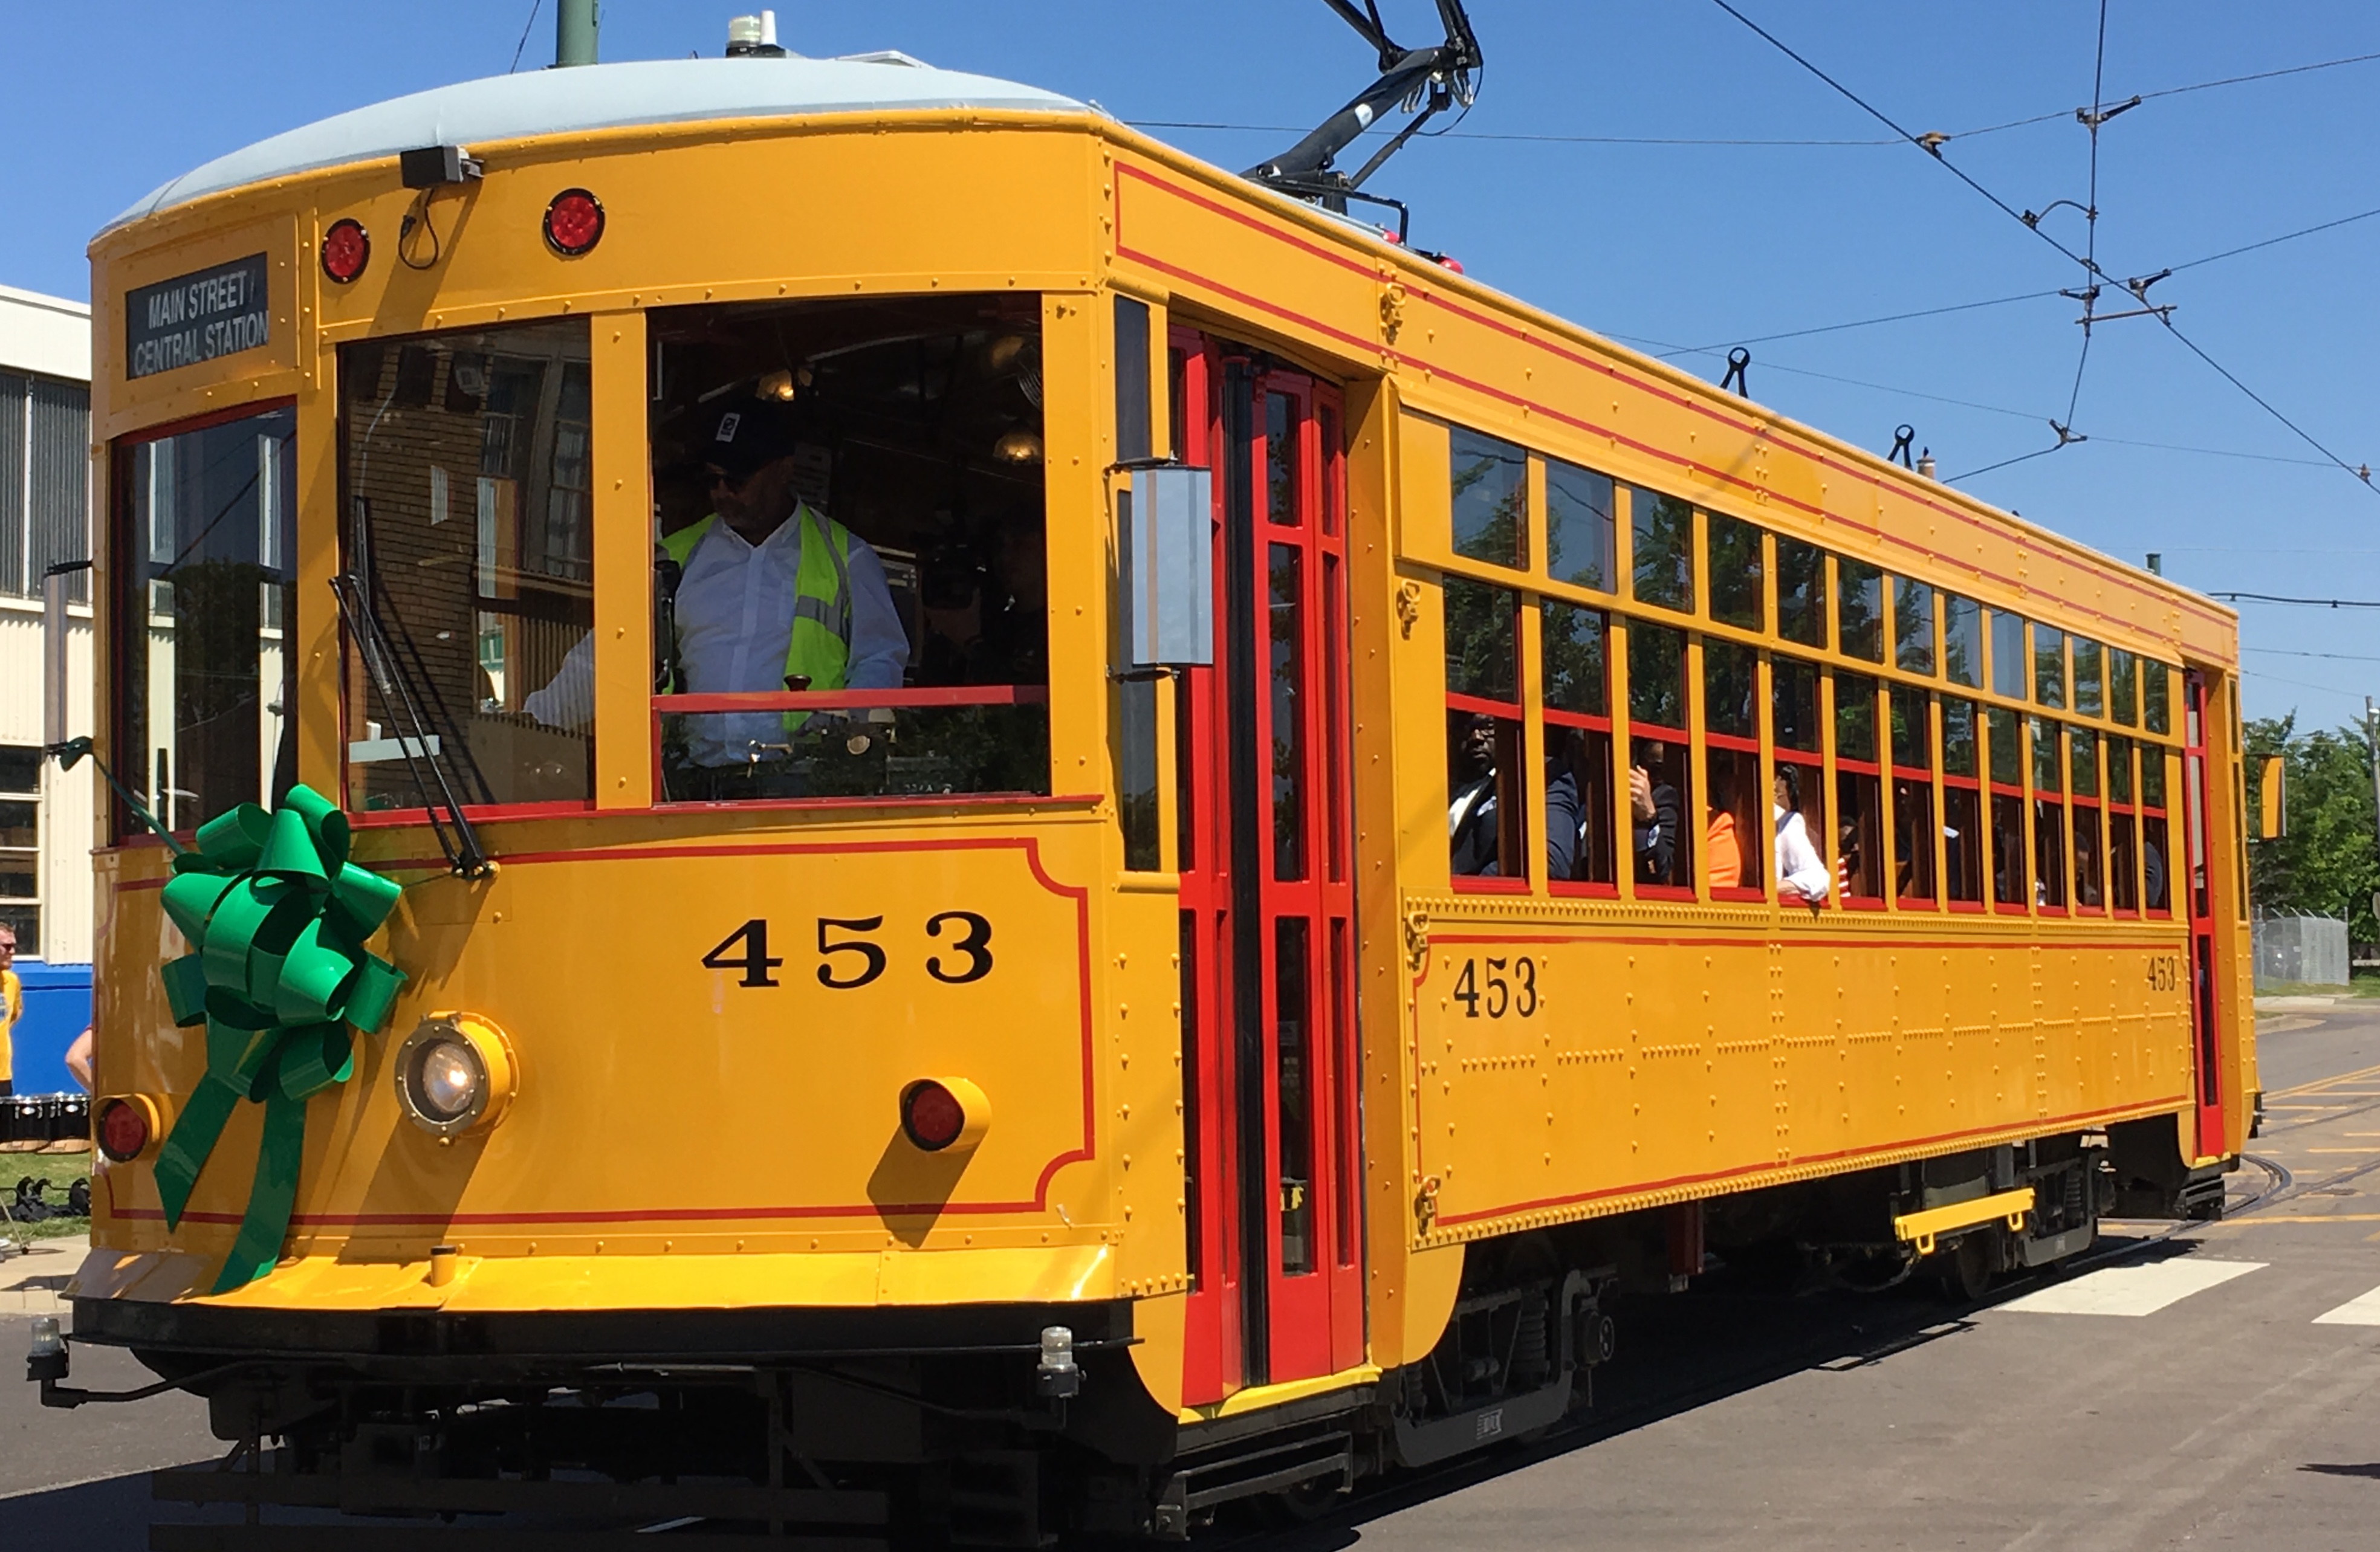 Trolleys return to Main Street - City of Memphis